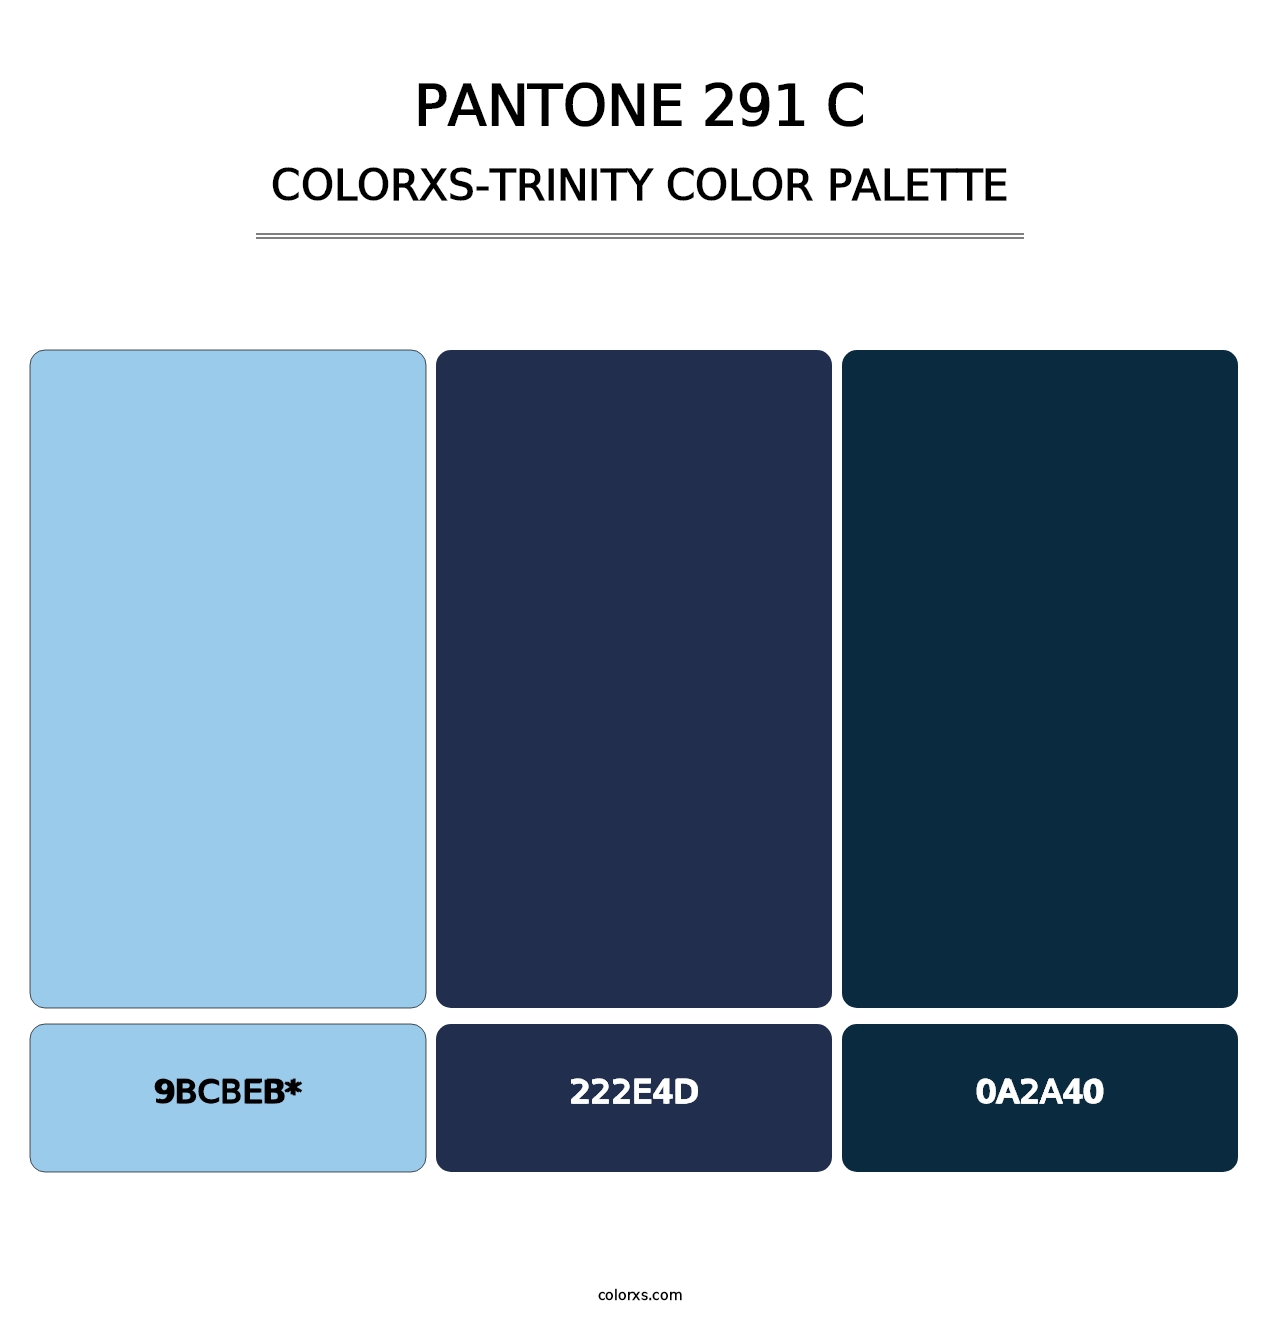 PANTONE 291 C - Colorxs Trinity Palette